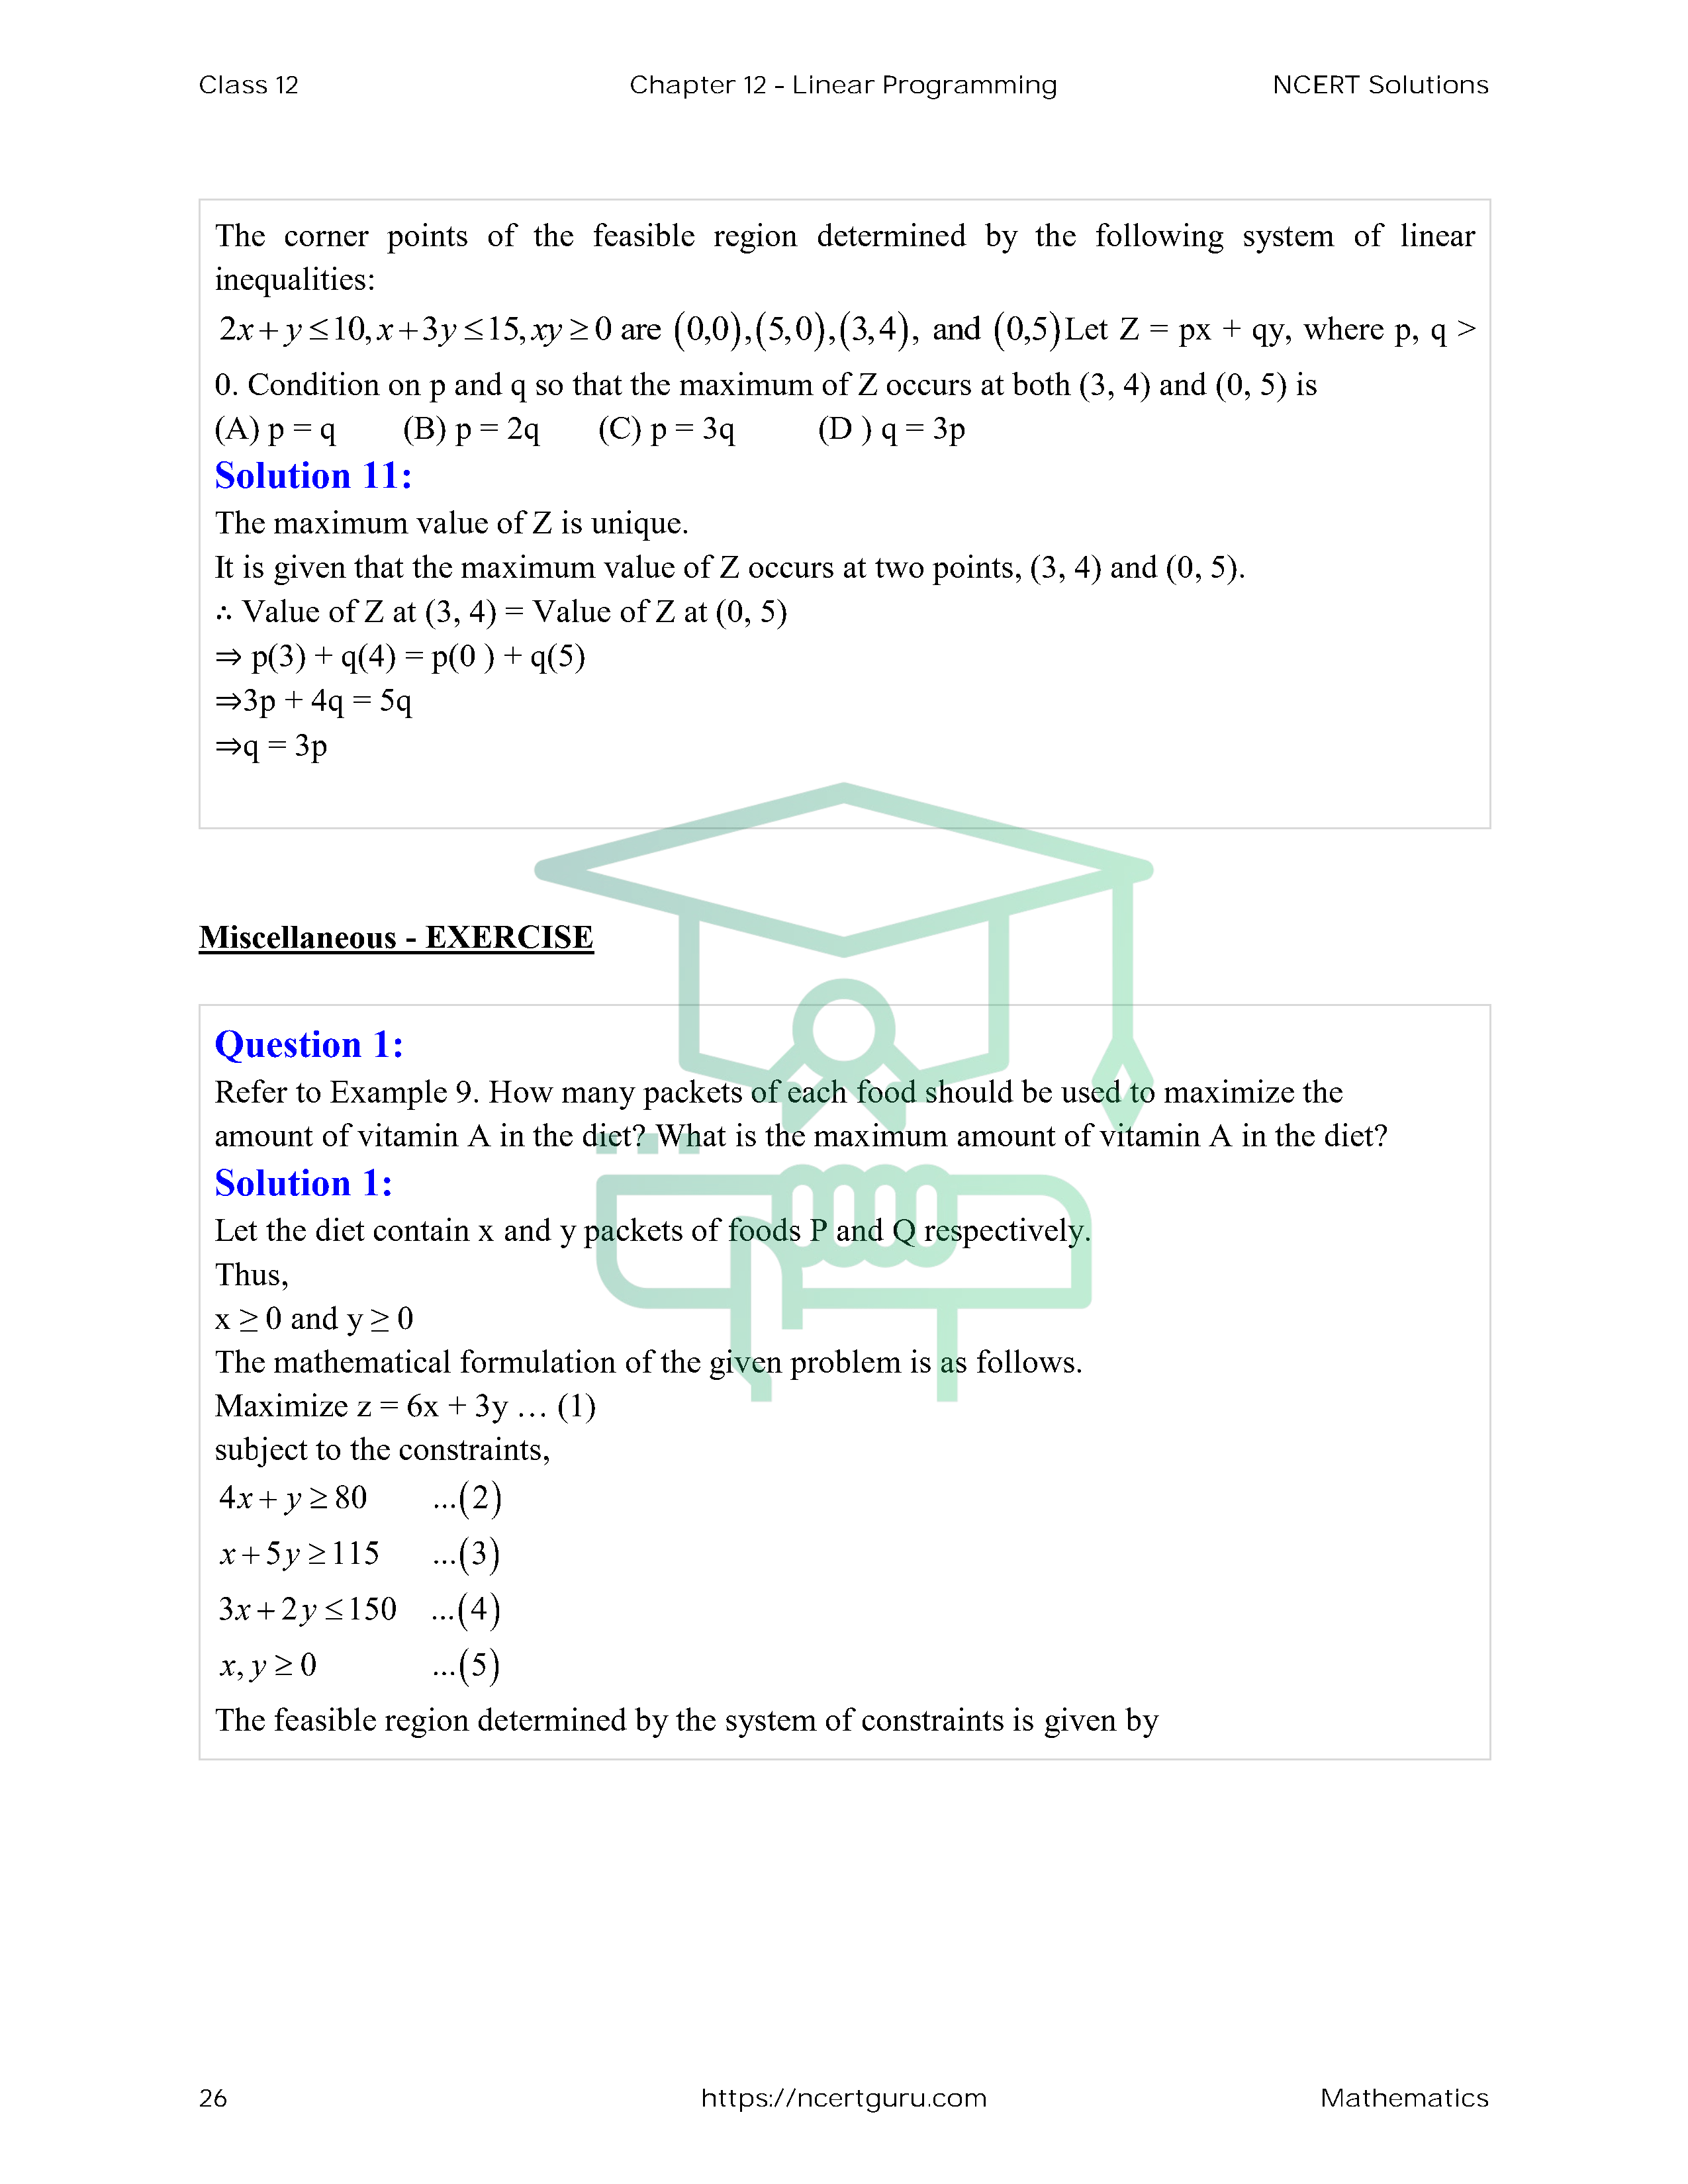 NCERT Solutions for Class 12 Maths Chapter 12 Linear Programming